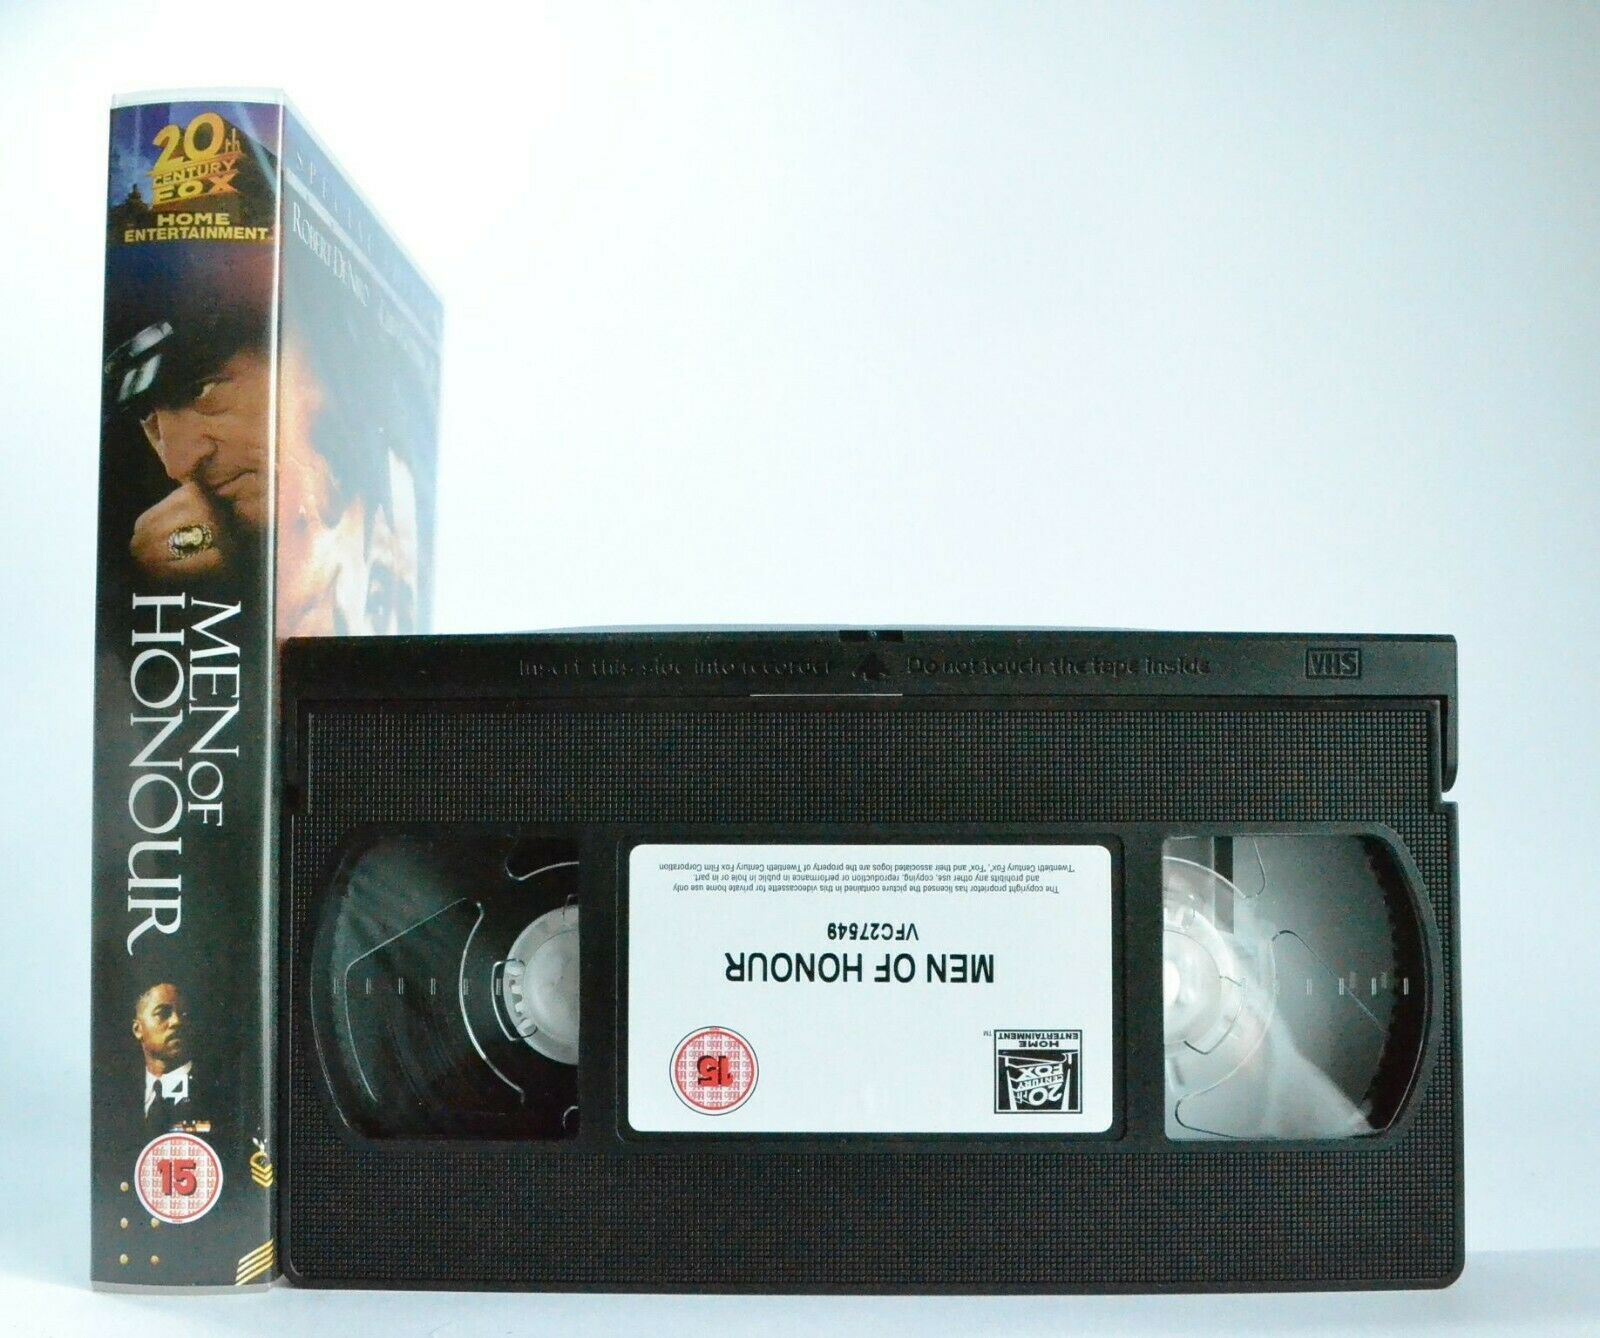 Men Of Honour: Special Edition - Drama - Based On True Story - R.De Niro - VHS-